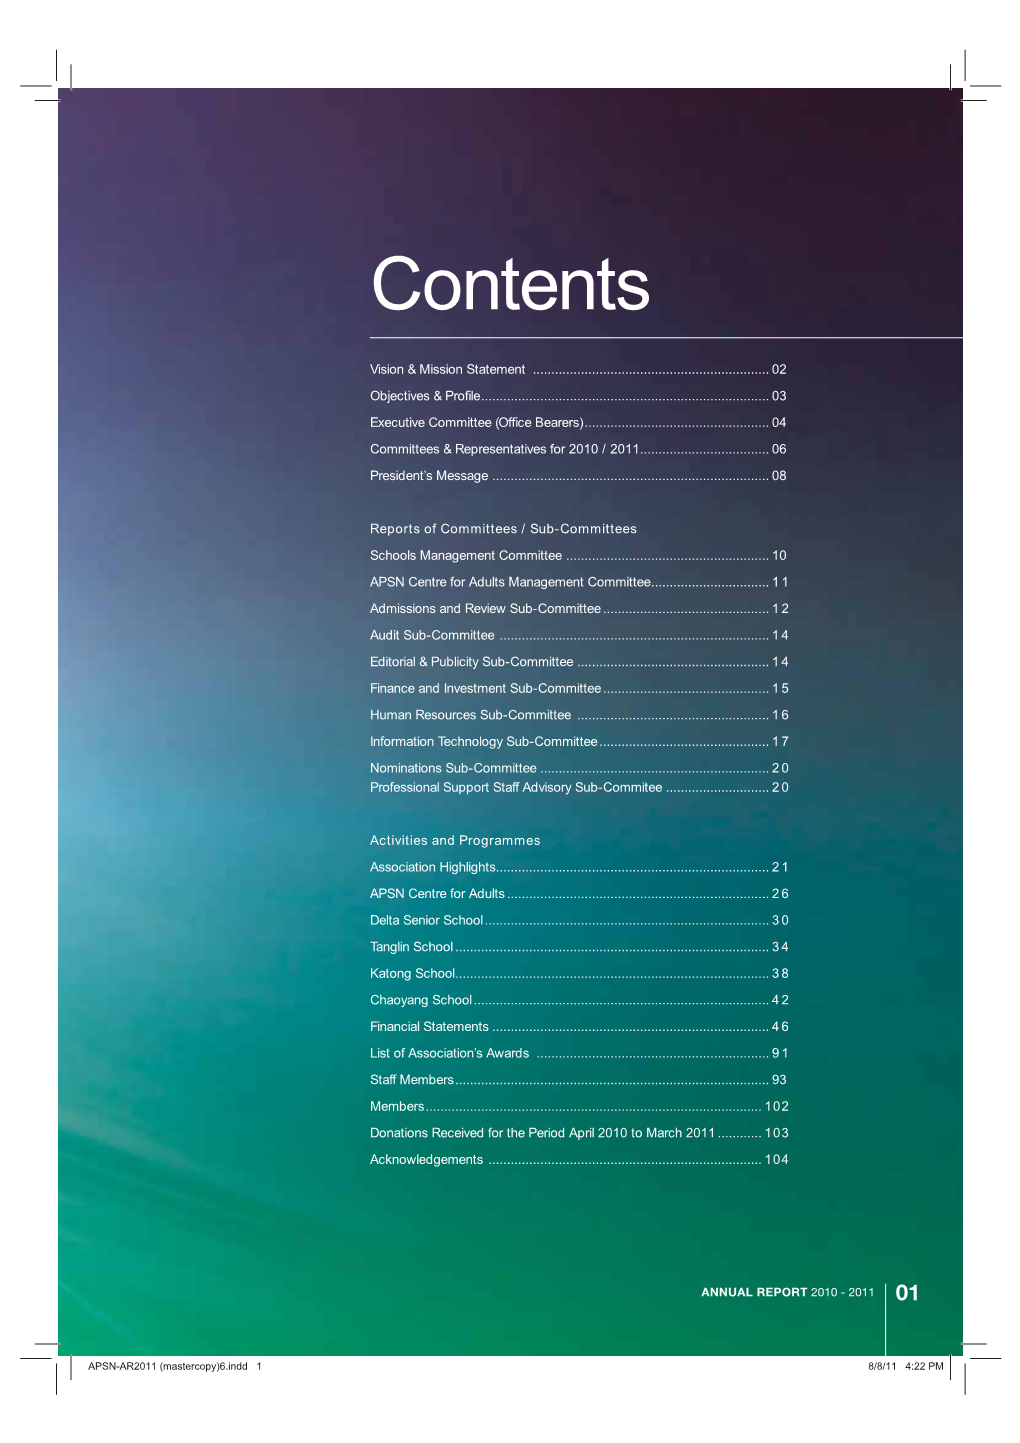 Download Report Contents